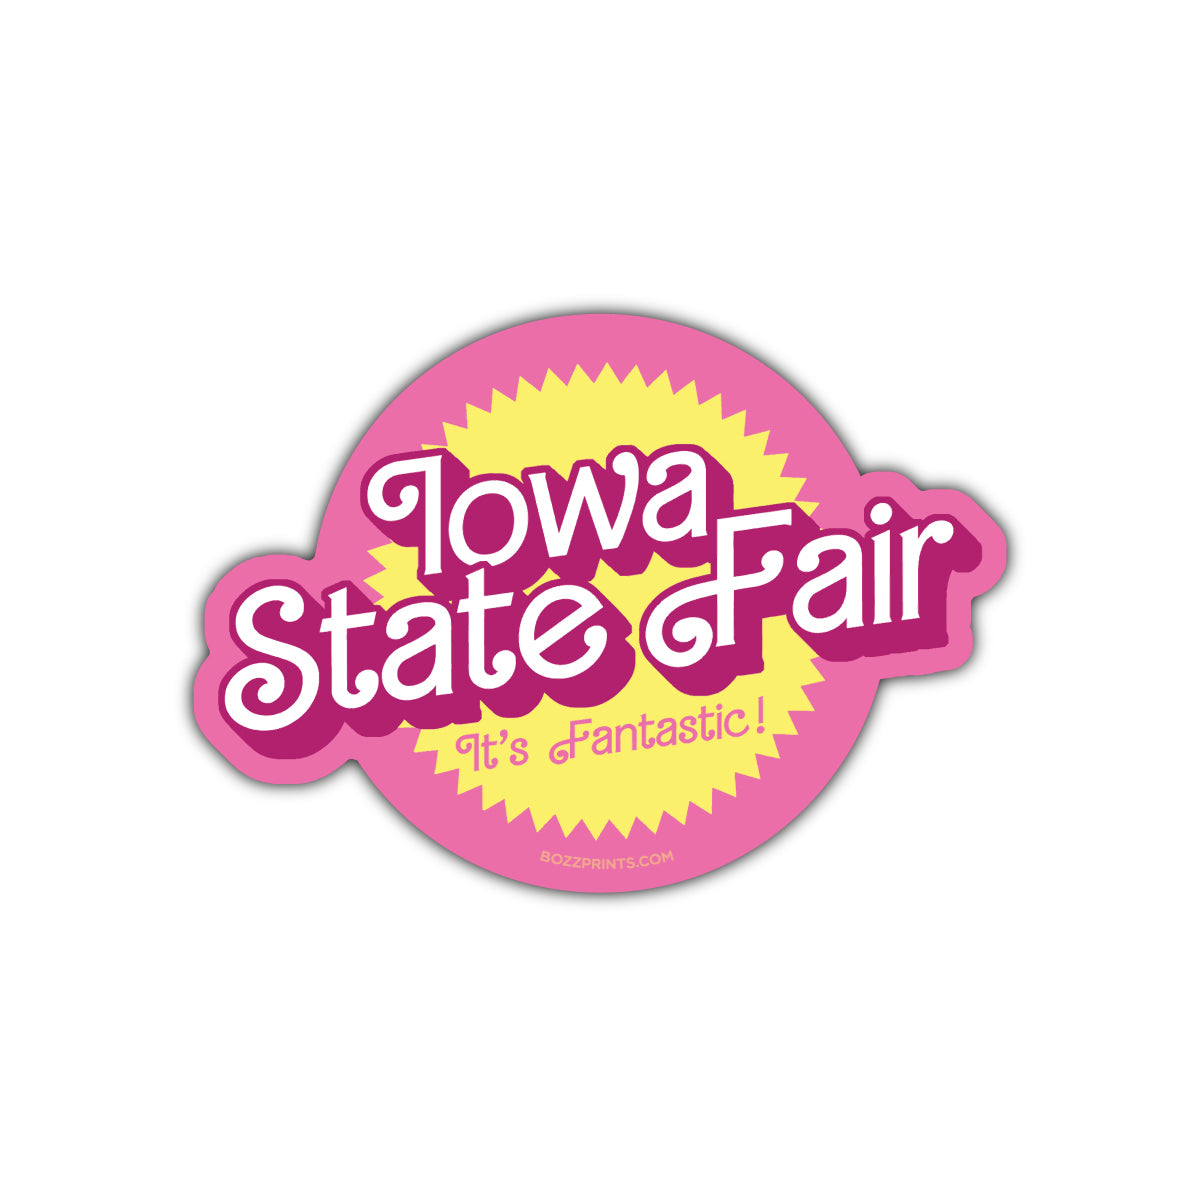 Iowa State Fair It's Fantastic